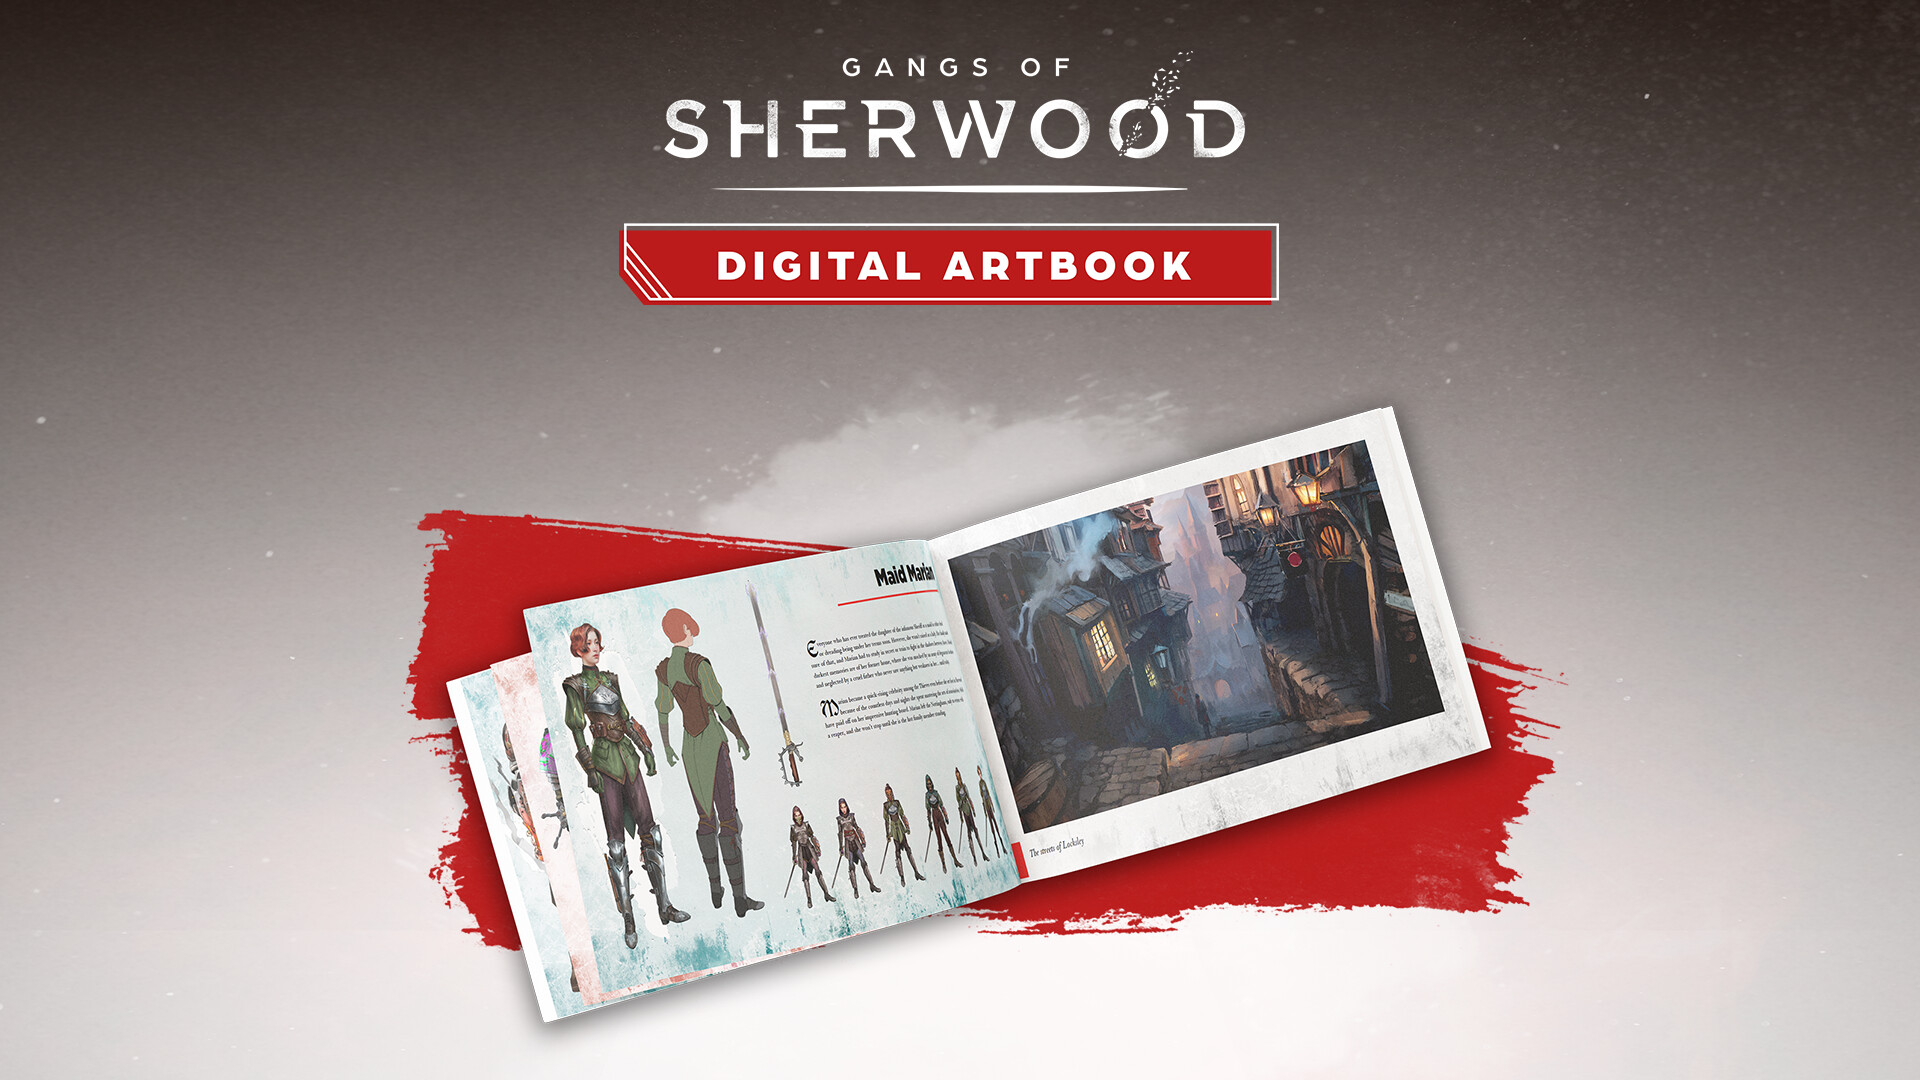 Gangs of Sherwood - Digital Artbook Featured Screenshot #1